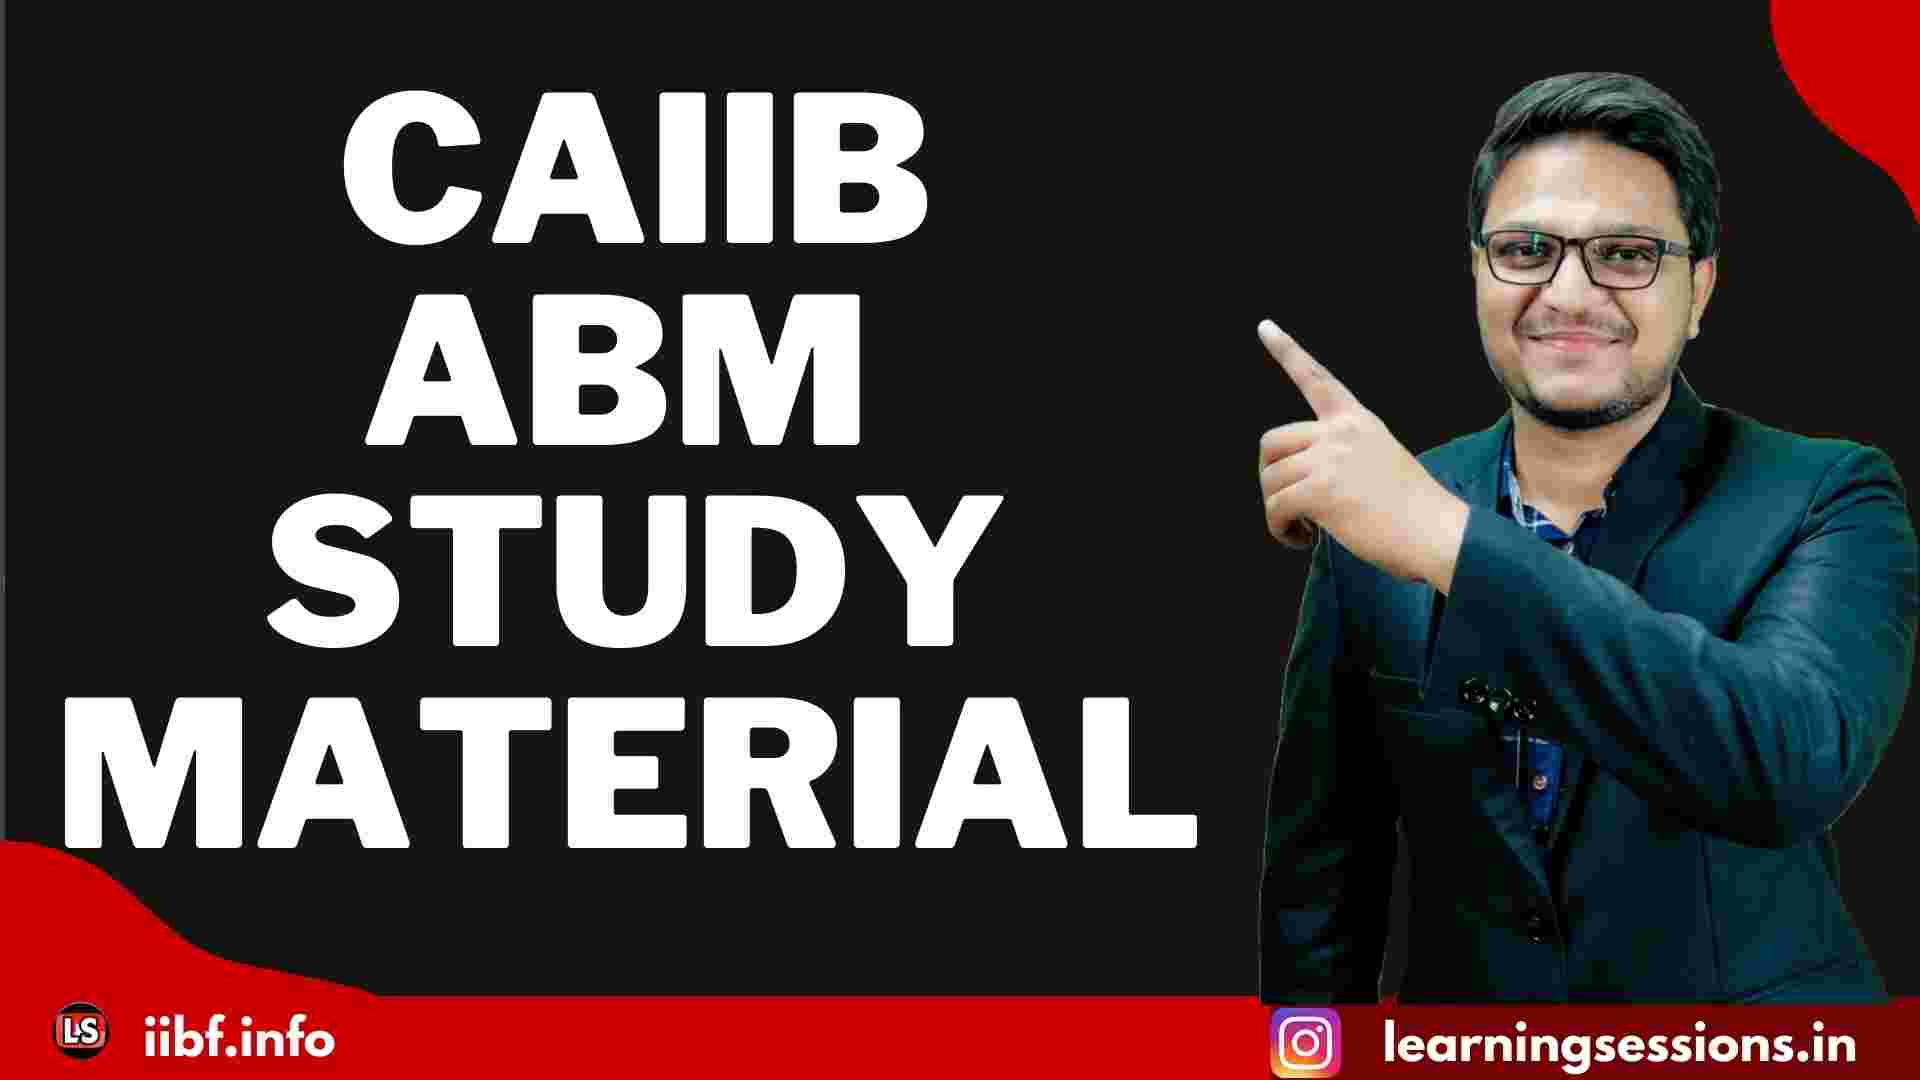 IIBF CAIIB ABM STUDY MATERIAL 2022 - Advanced Bank Management